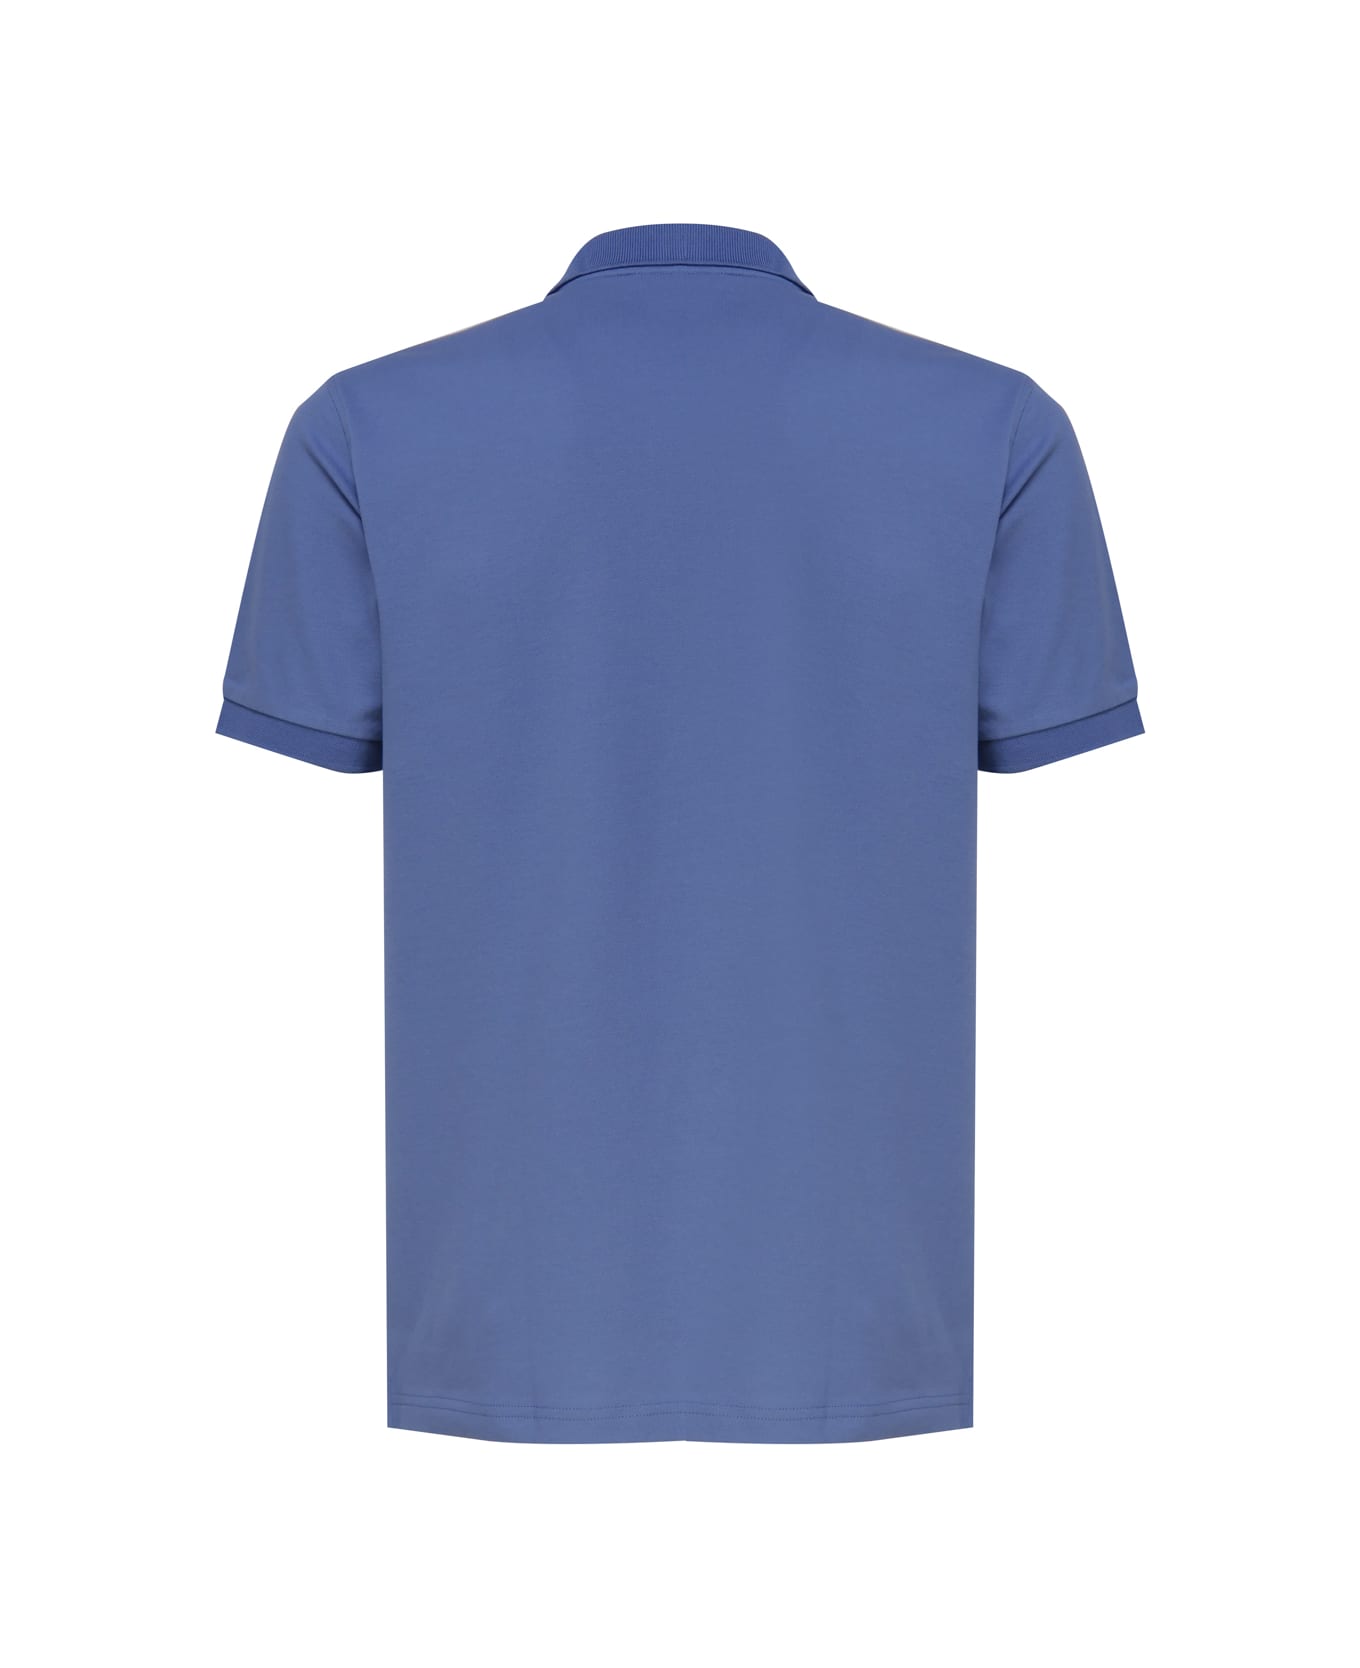 Sun 68 Polo T-shirt In Cotton - Avion Blue ポロシャツ